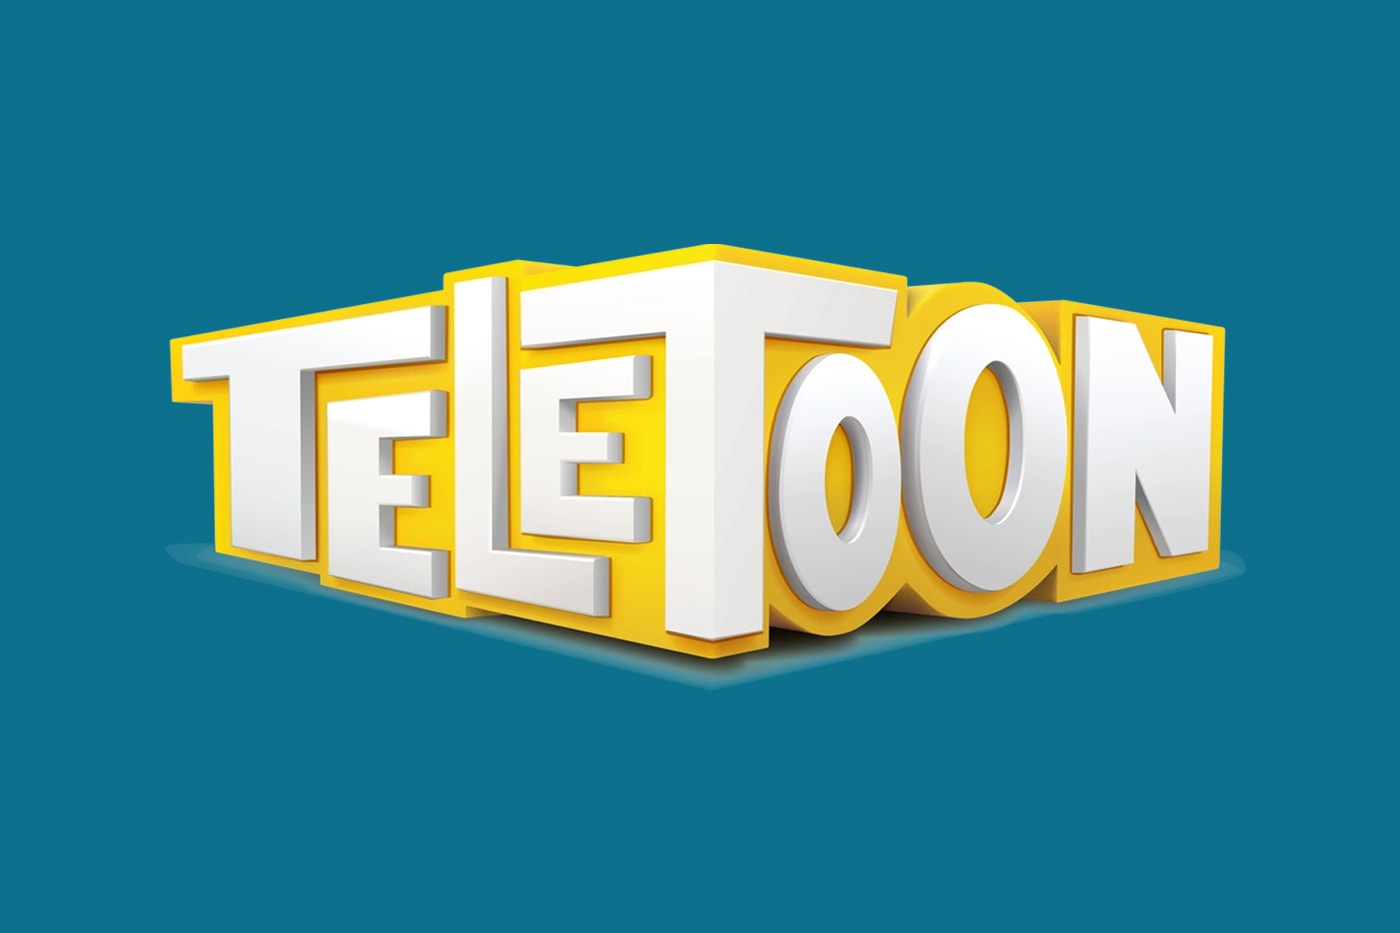 Canadian Animation TV Channel Teletoon Shutting Down Info